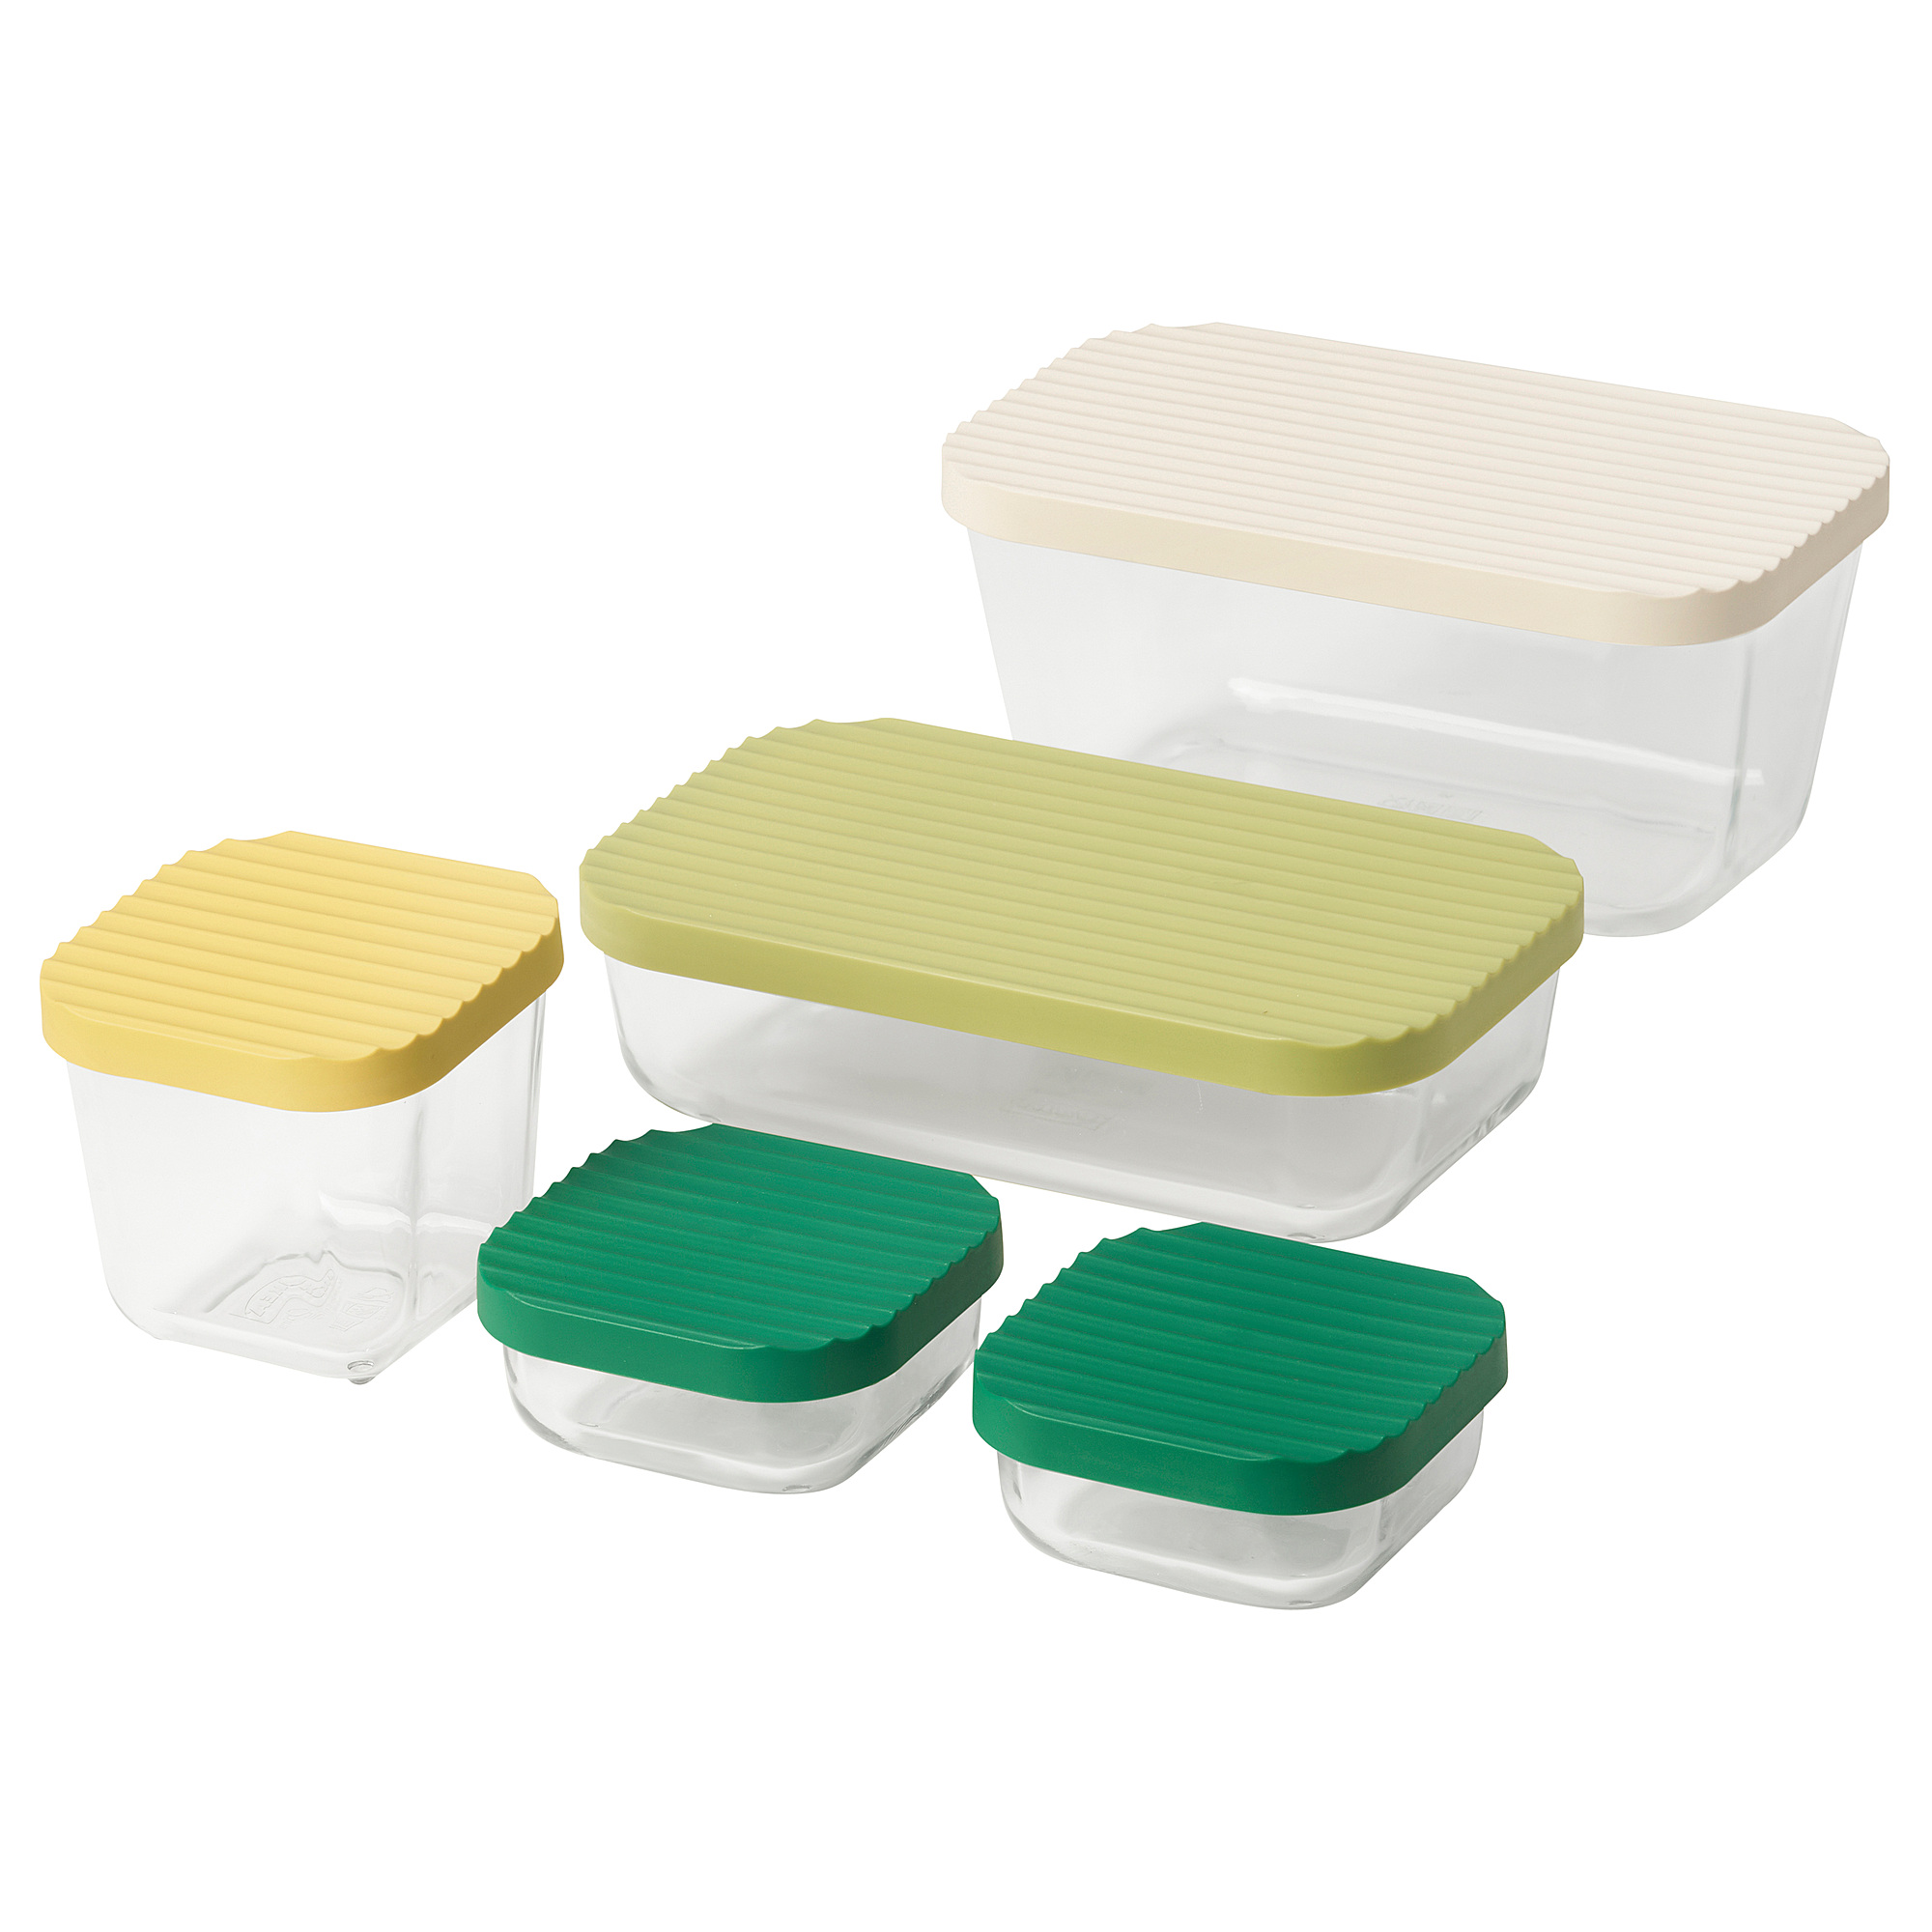 HAVSTOBIS food container with lid, set of 5